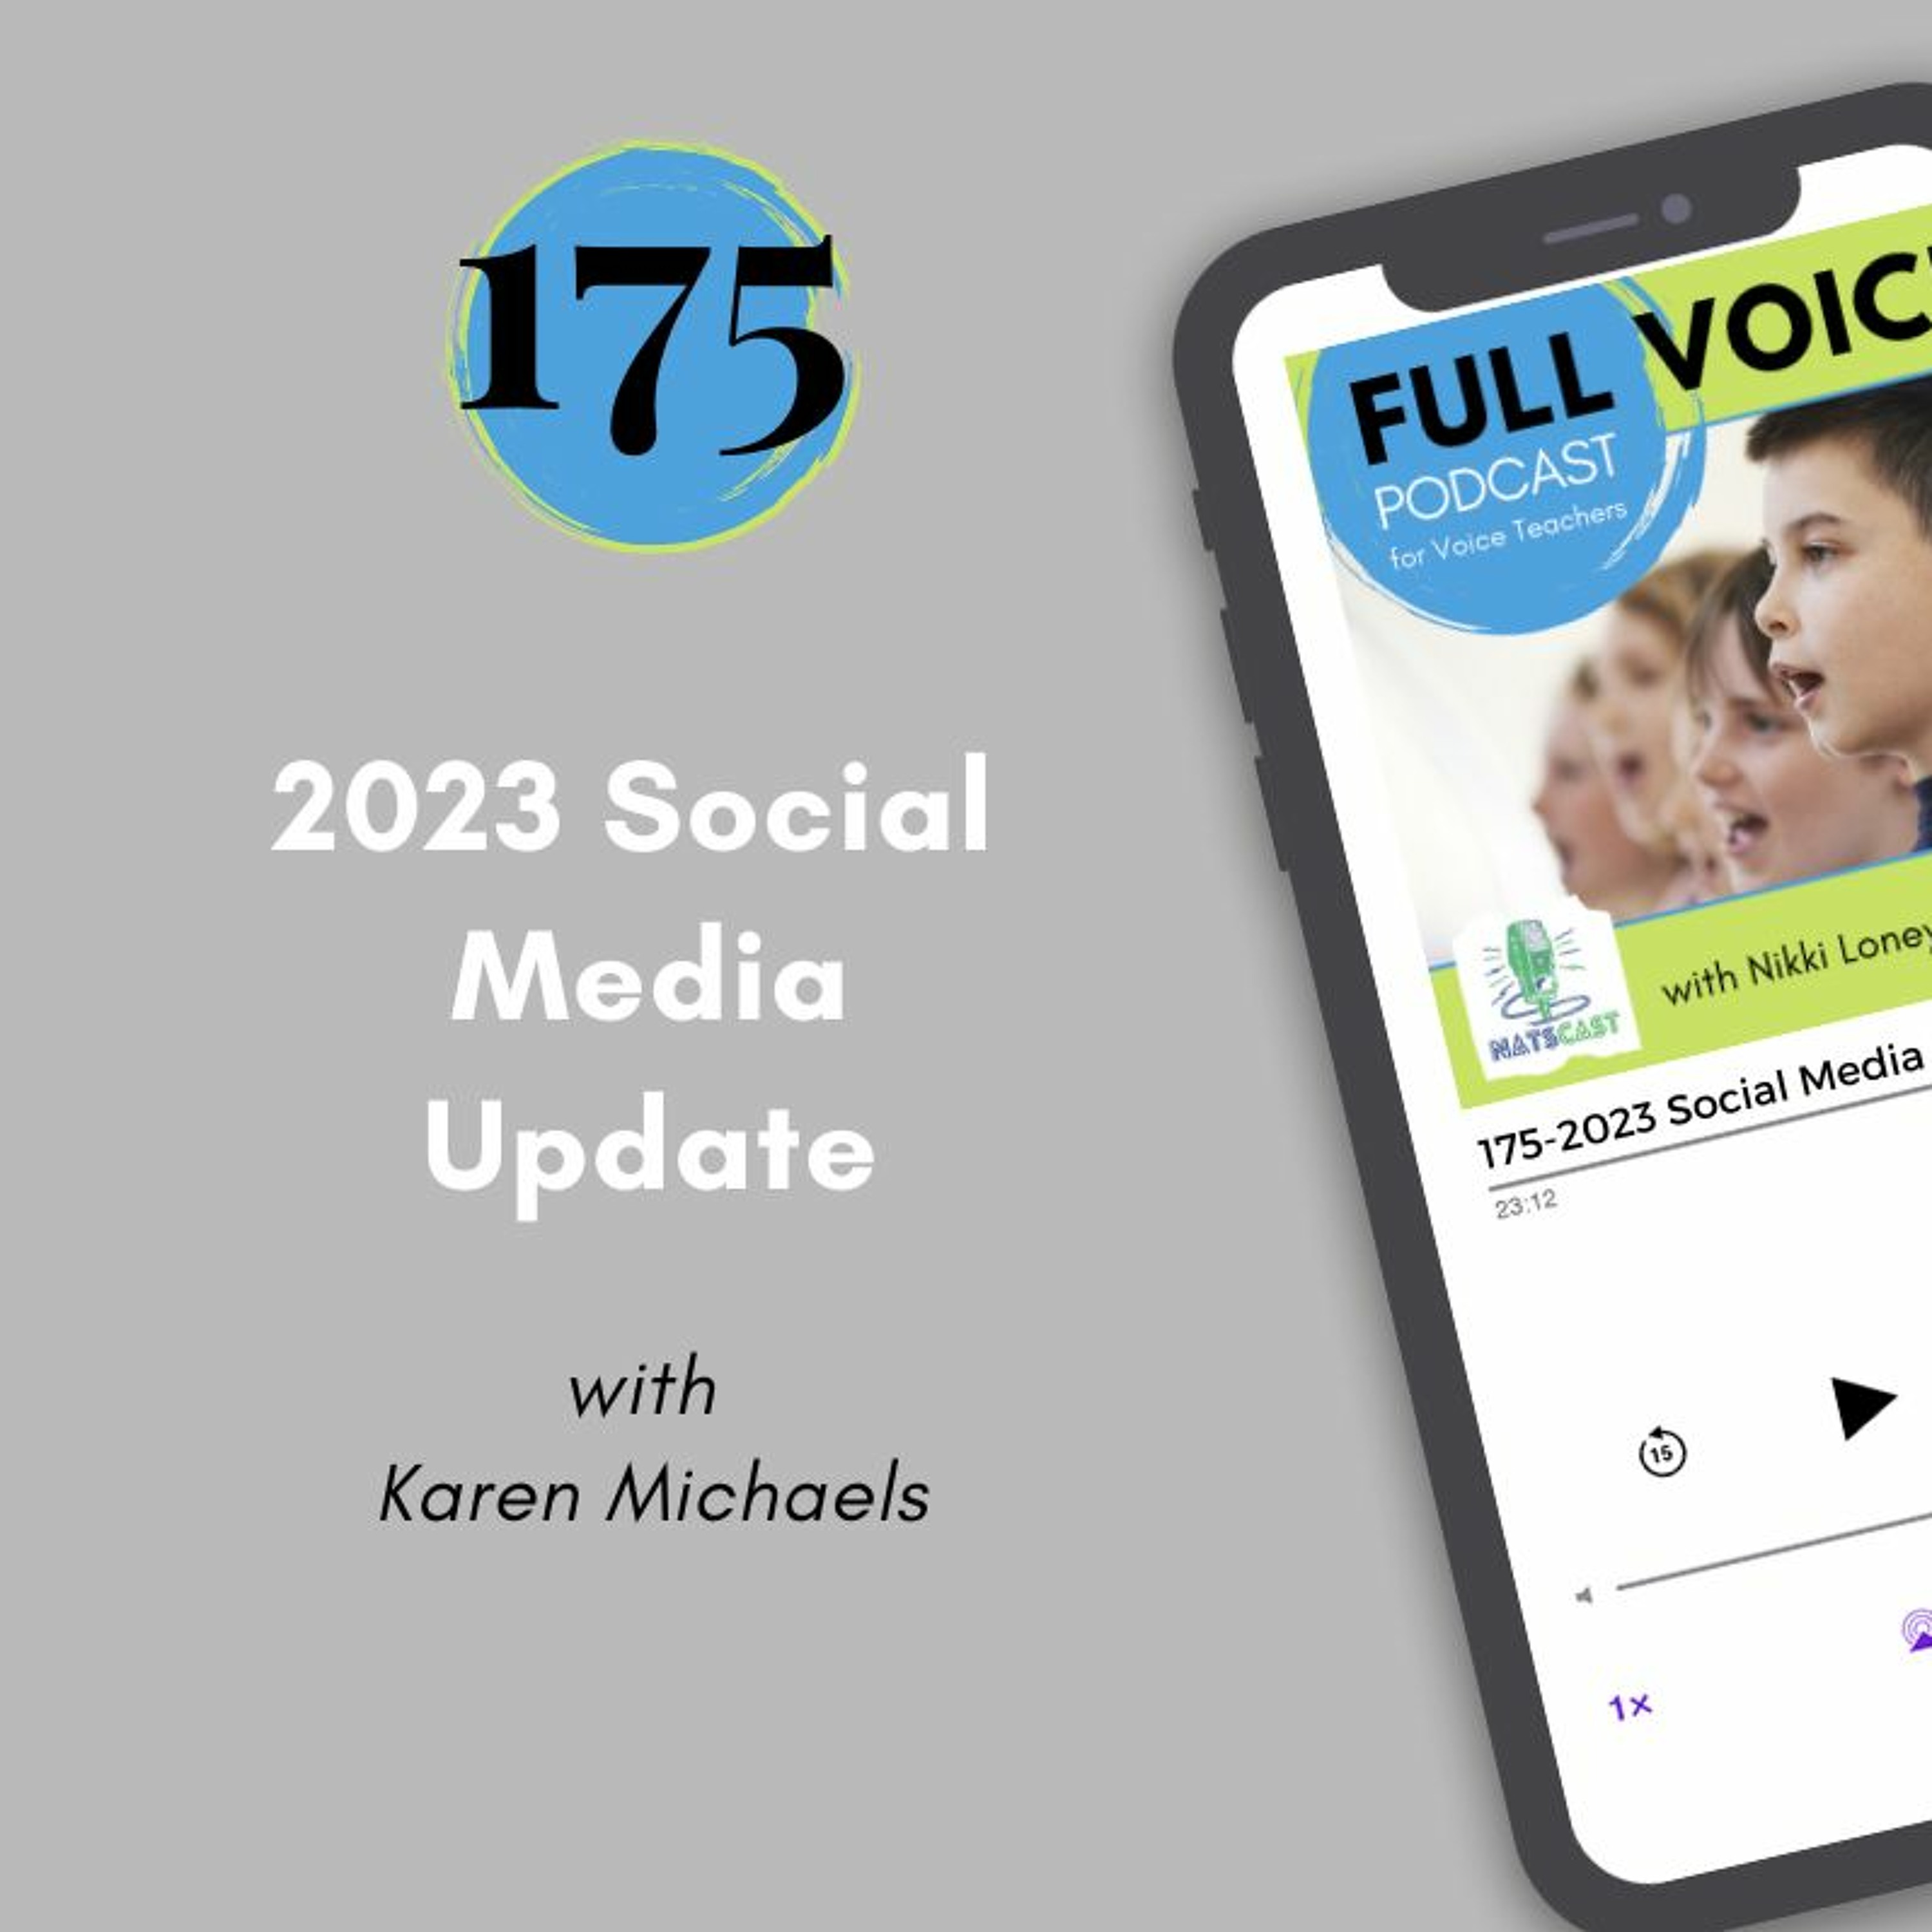 FVPC #175 2023 Social Media Update with Karen Michaels